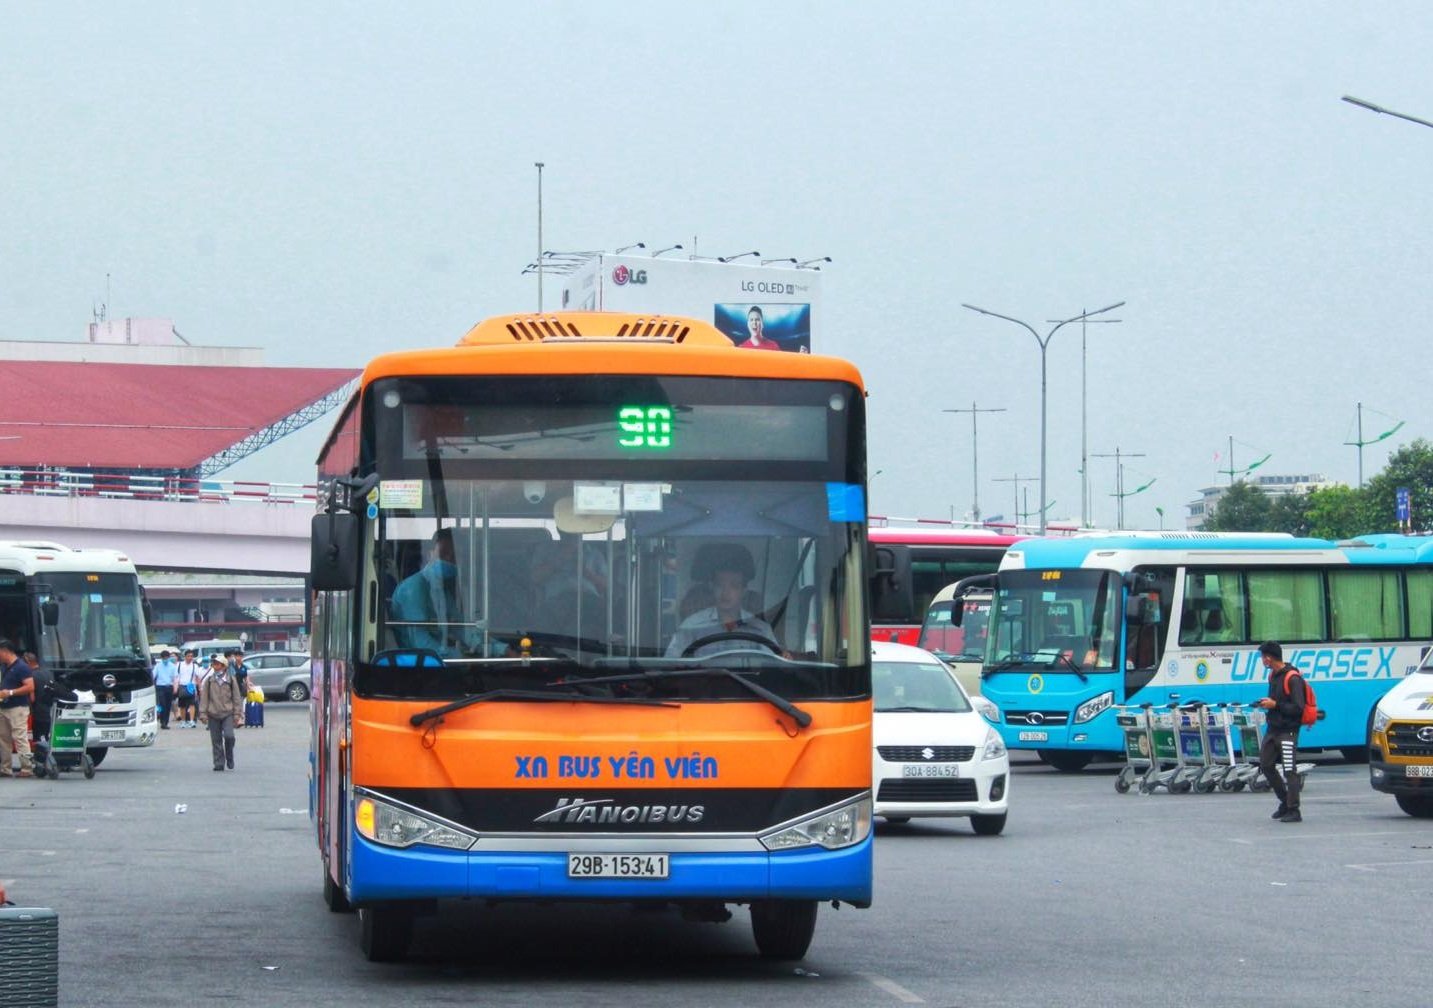 Hanoi airport bus